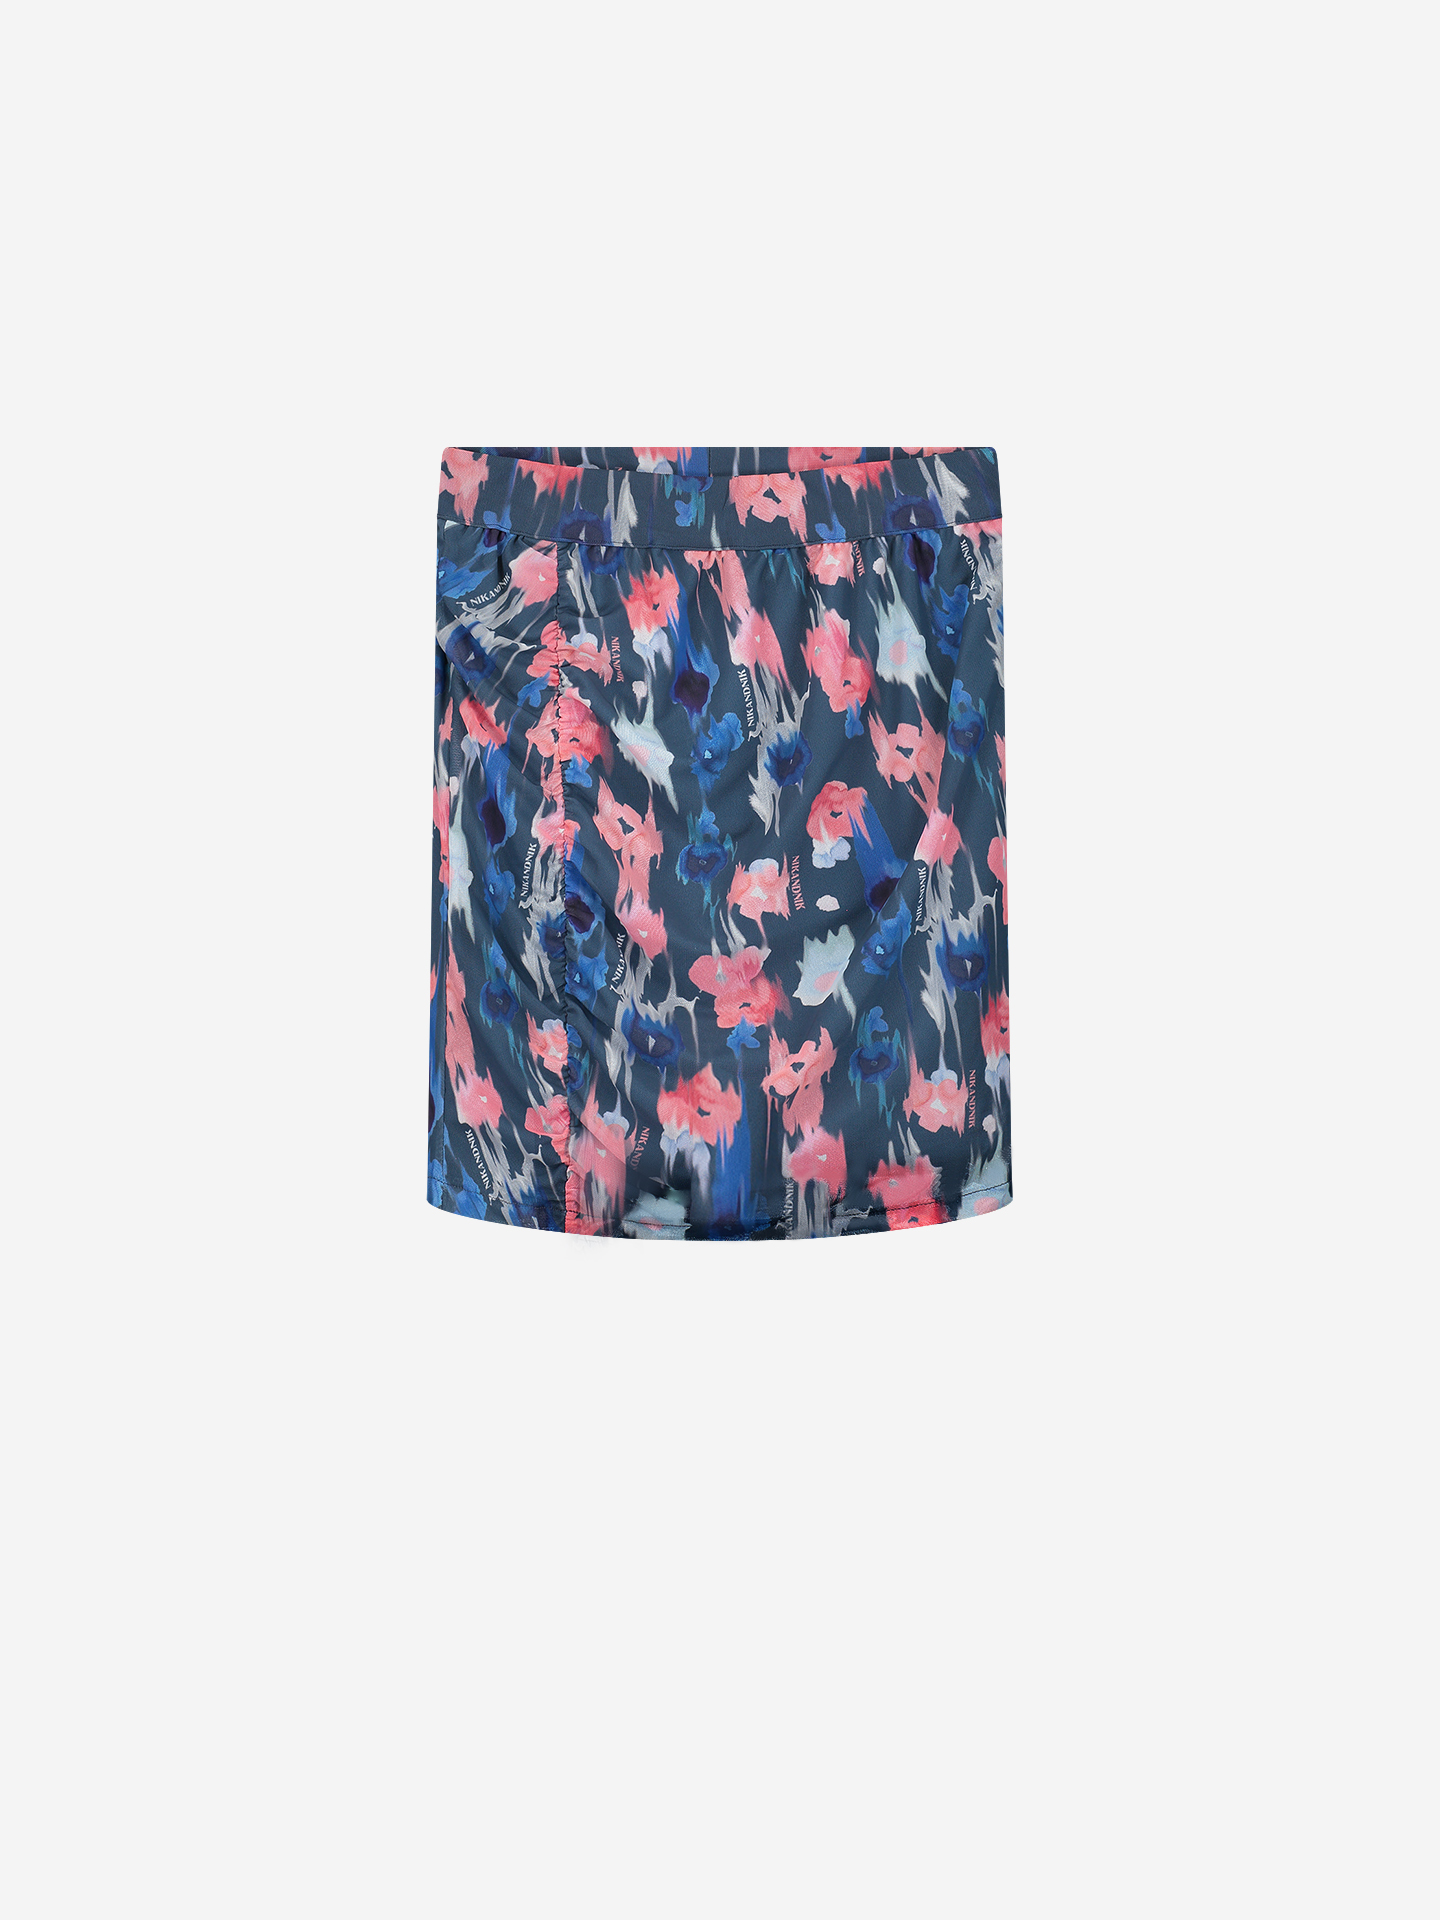 Floral mesh skirt